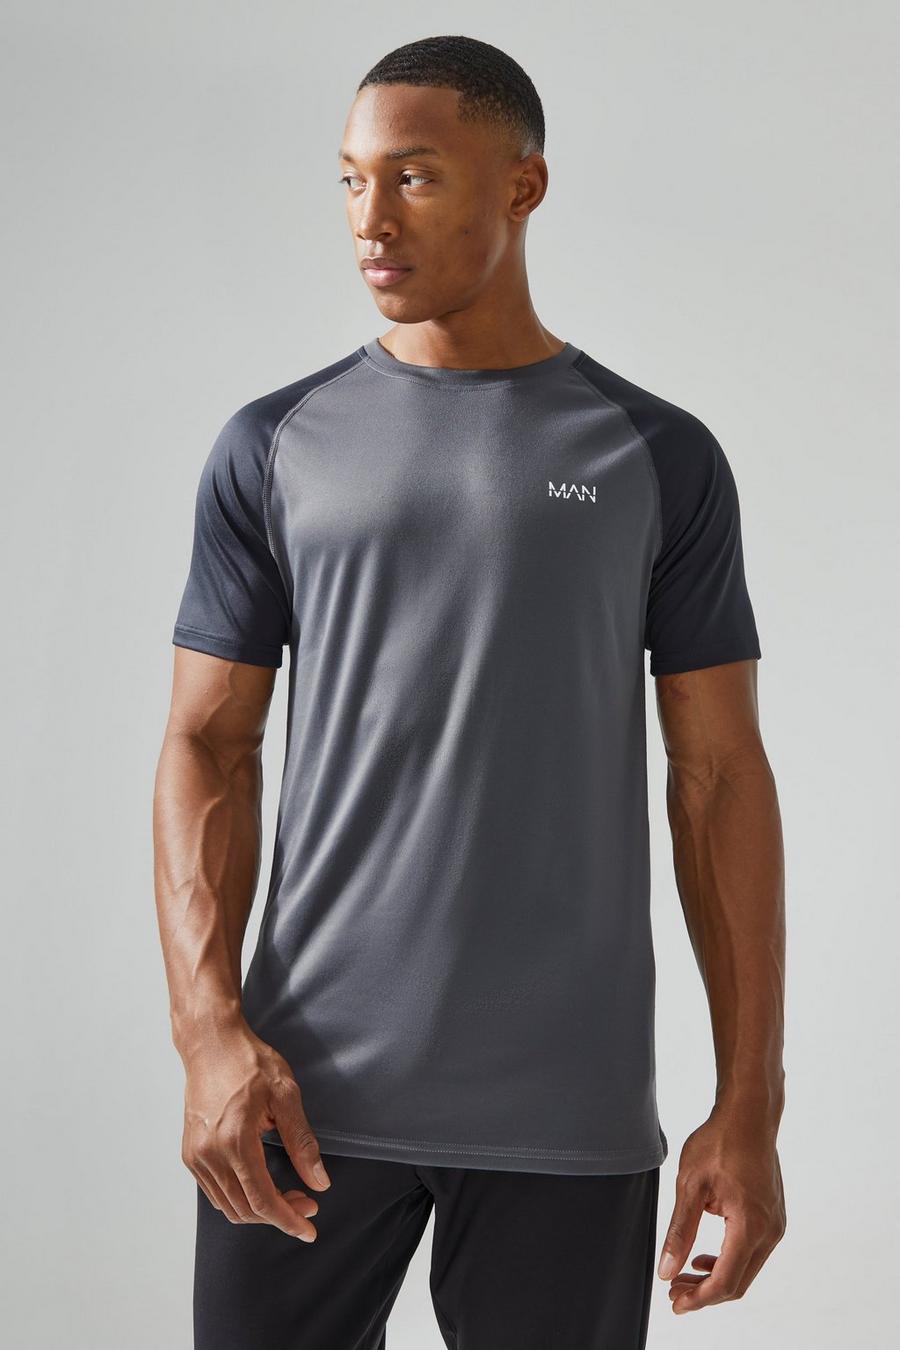 T-shirt Man Active Gym con maniche raglan, Charcoal